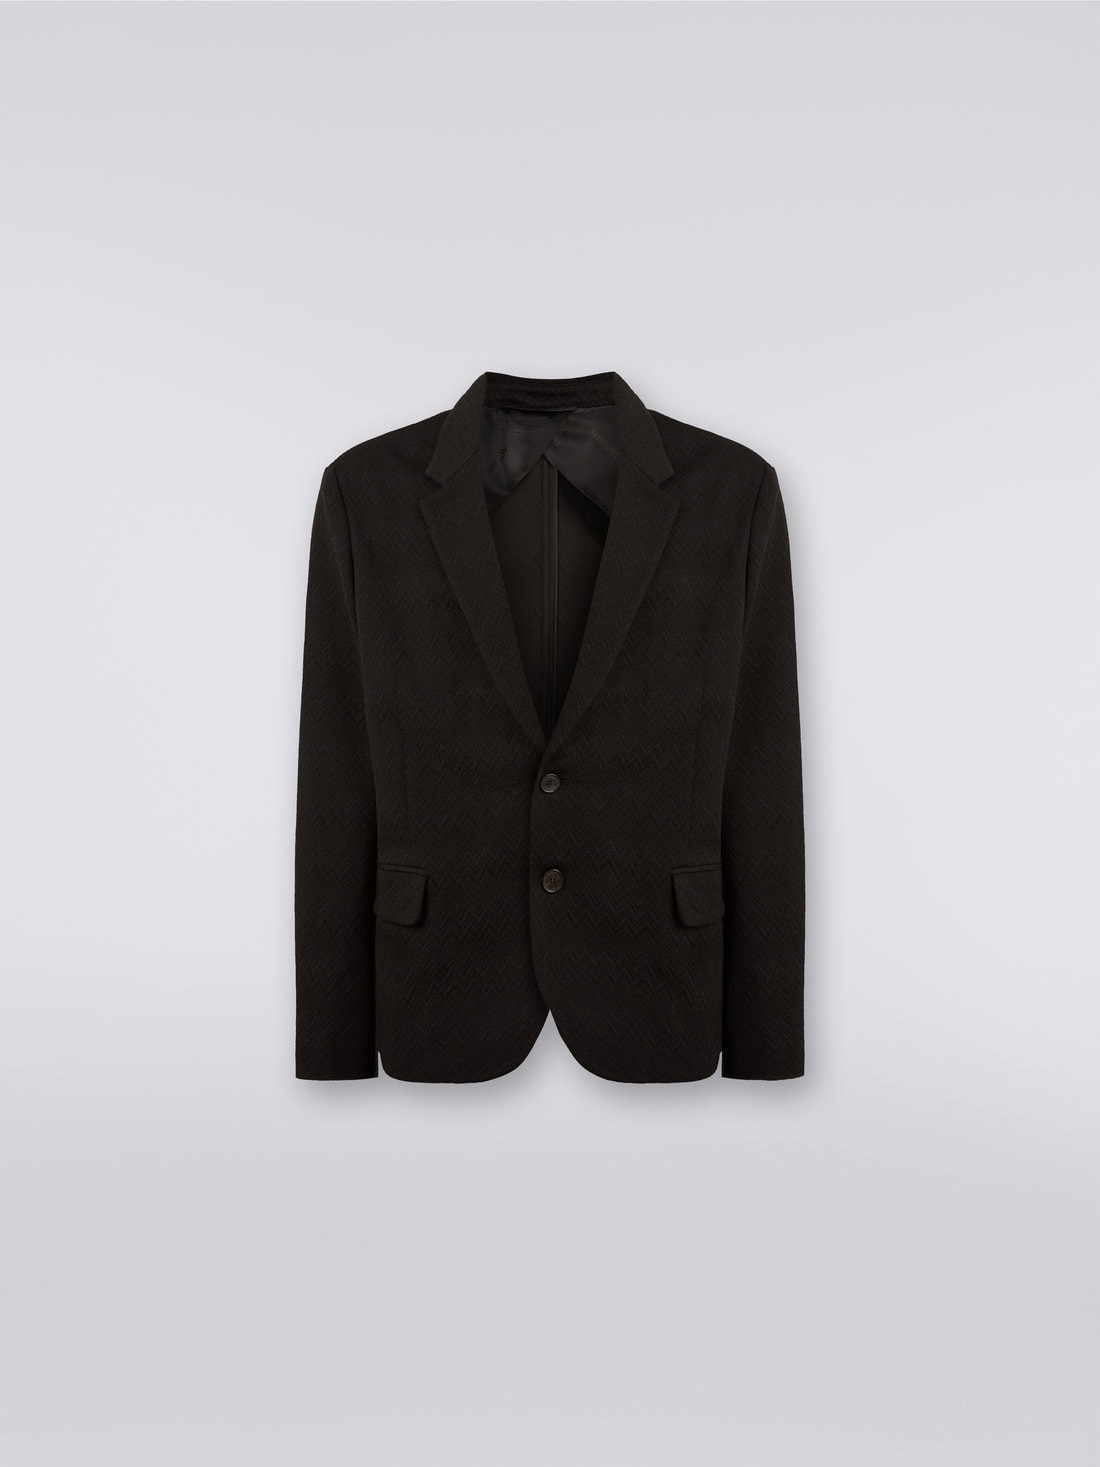 Wool blend jacket with chevron pattern, Black    - US23WF05BT005U93911 - 0